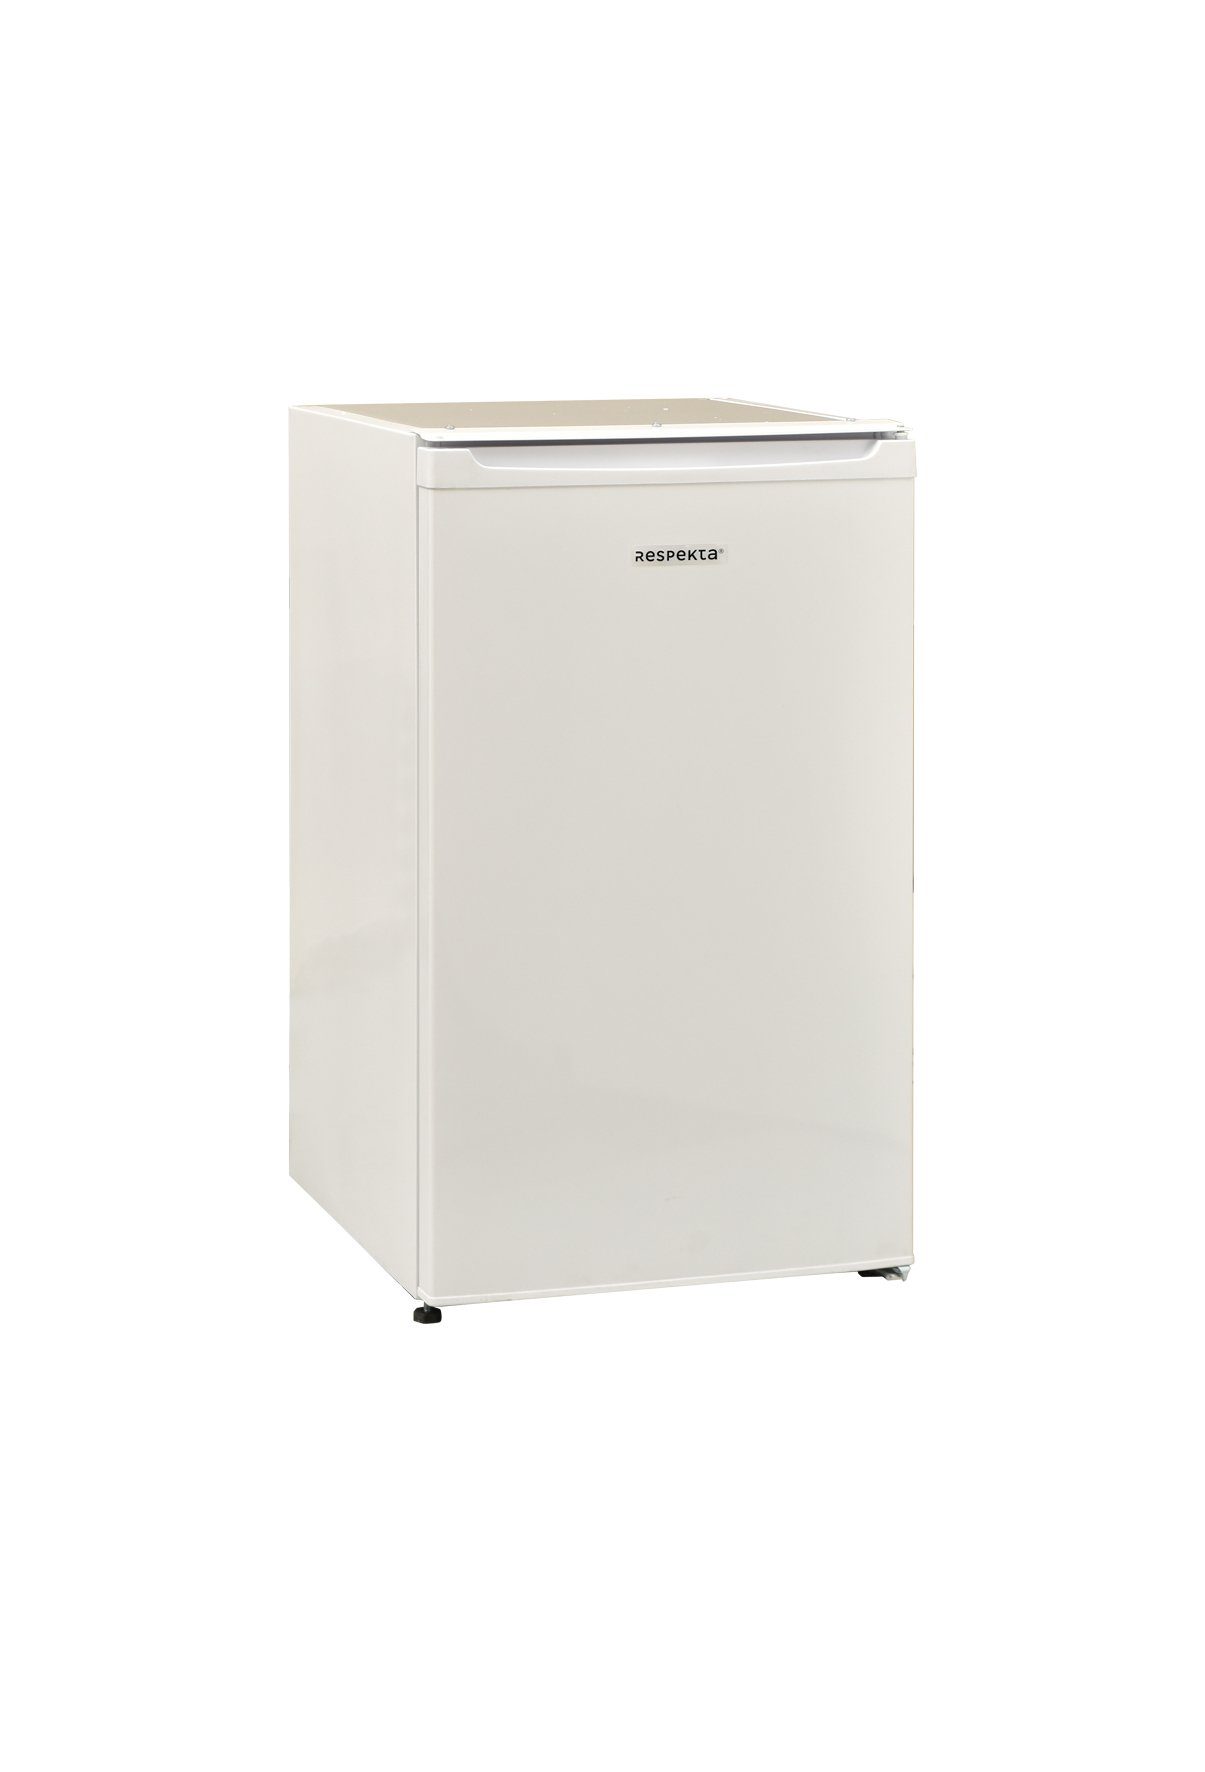 Kühlschrank KSU50 mit Unterbaufähig Gefrierfach RESPEKTA